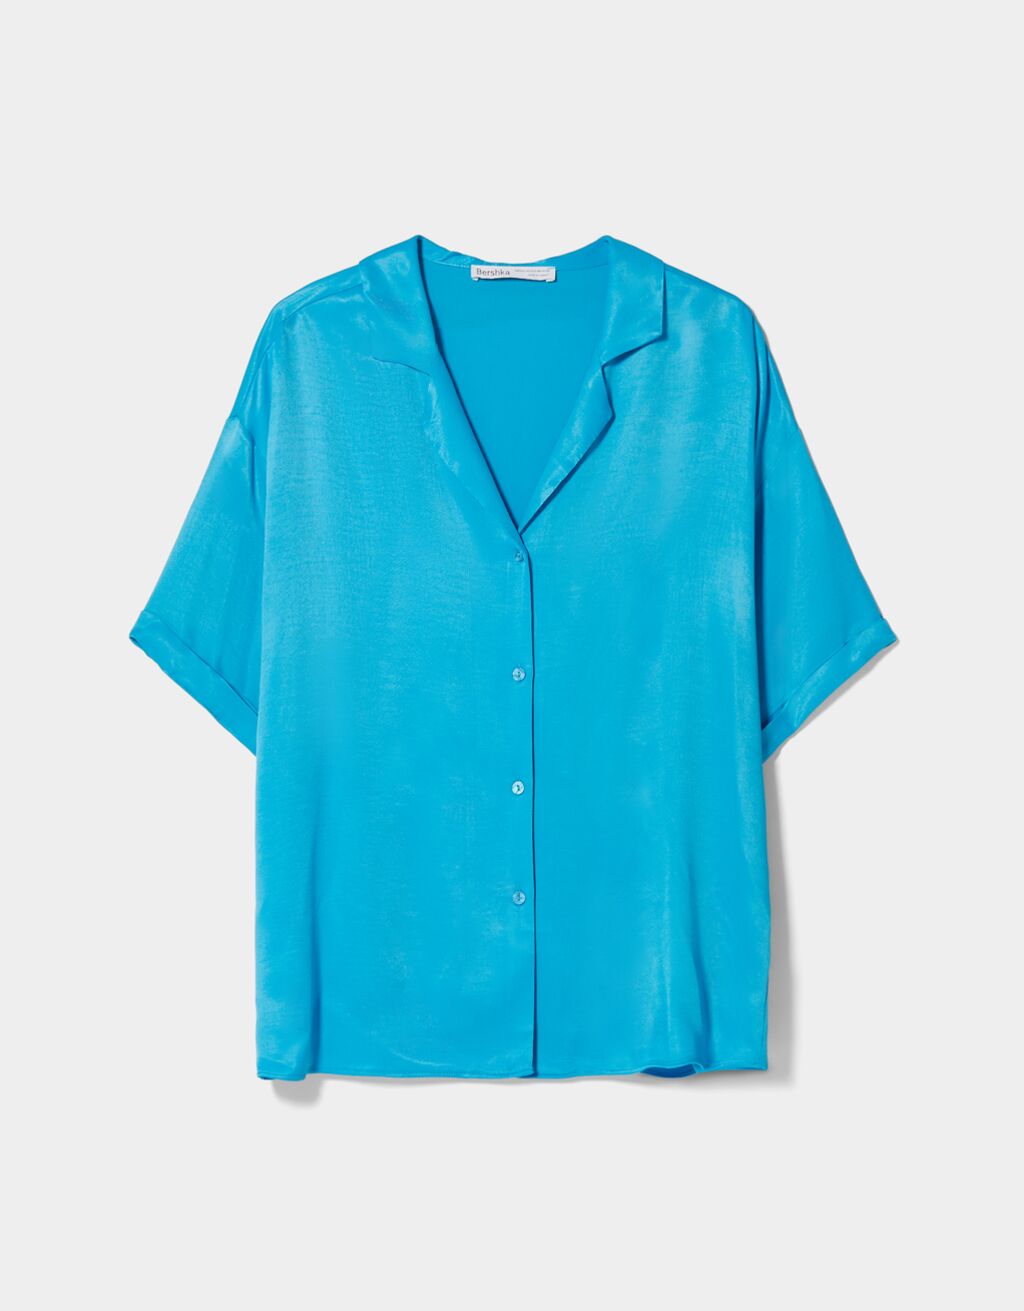 Oversize satiny short sleeve shirt with lapel collar